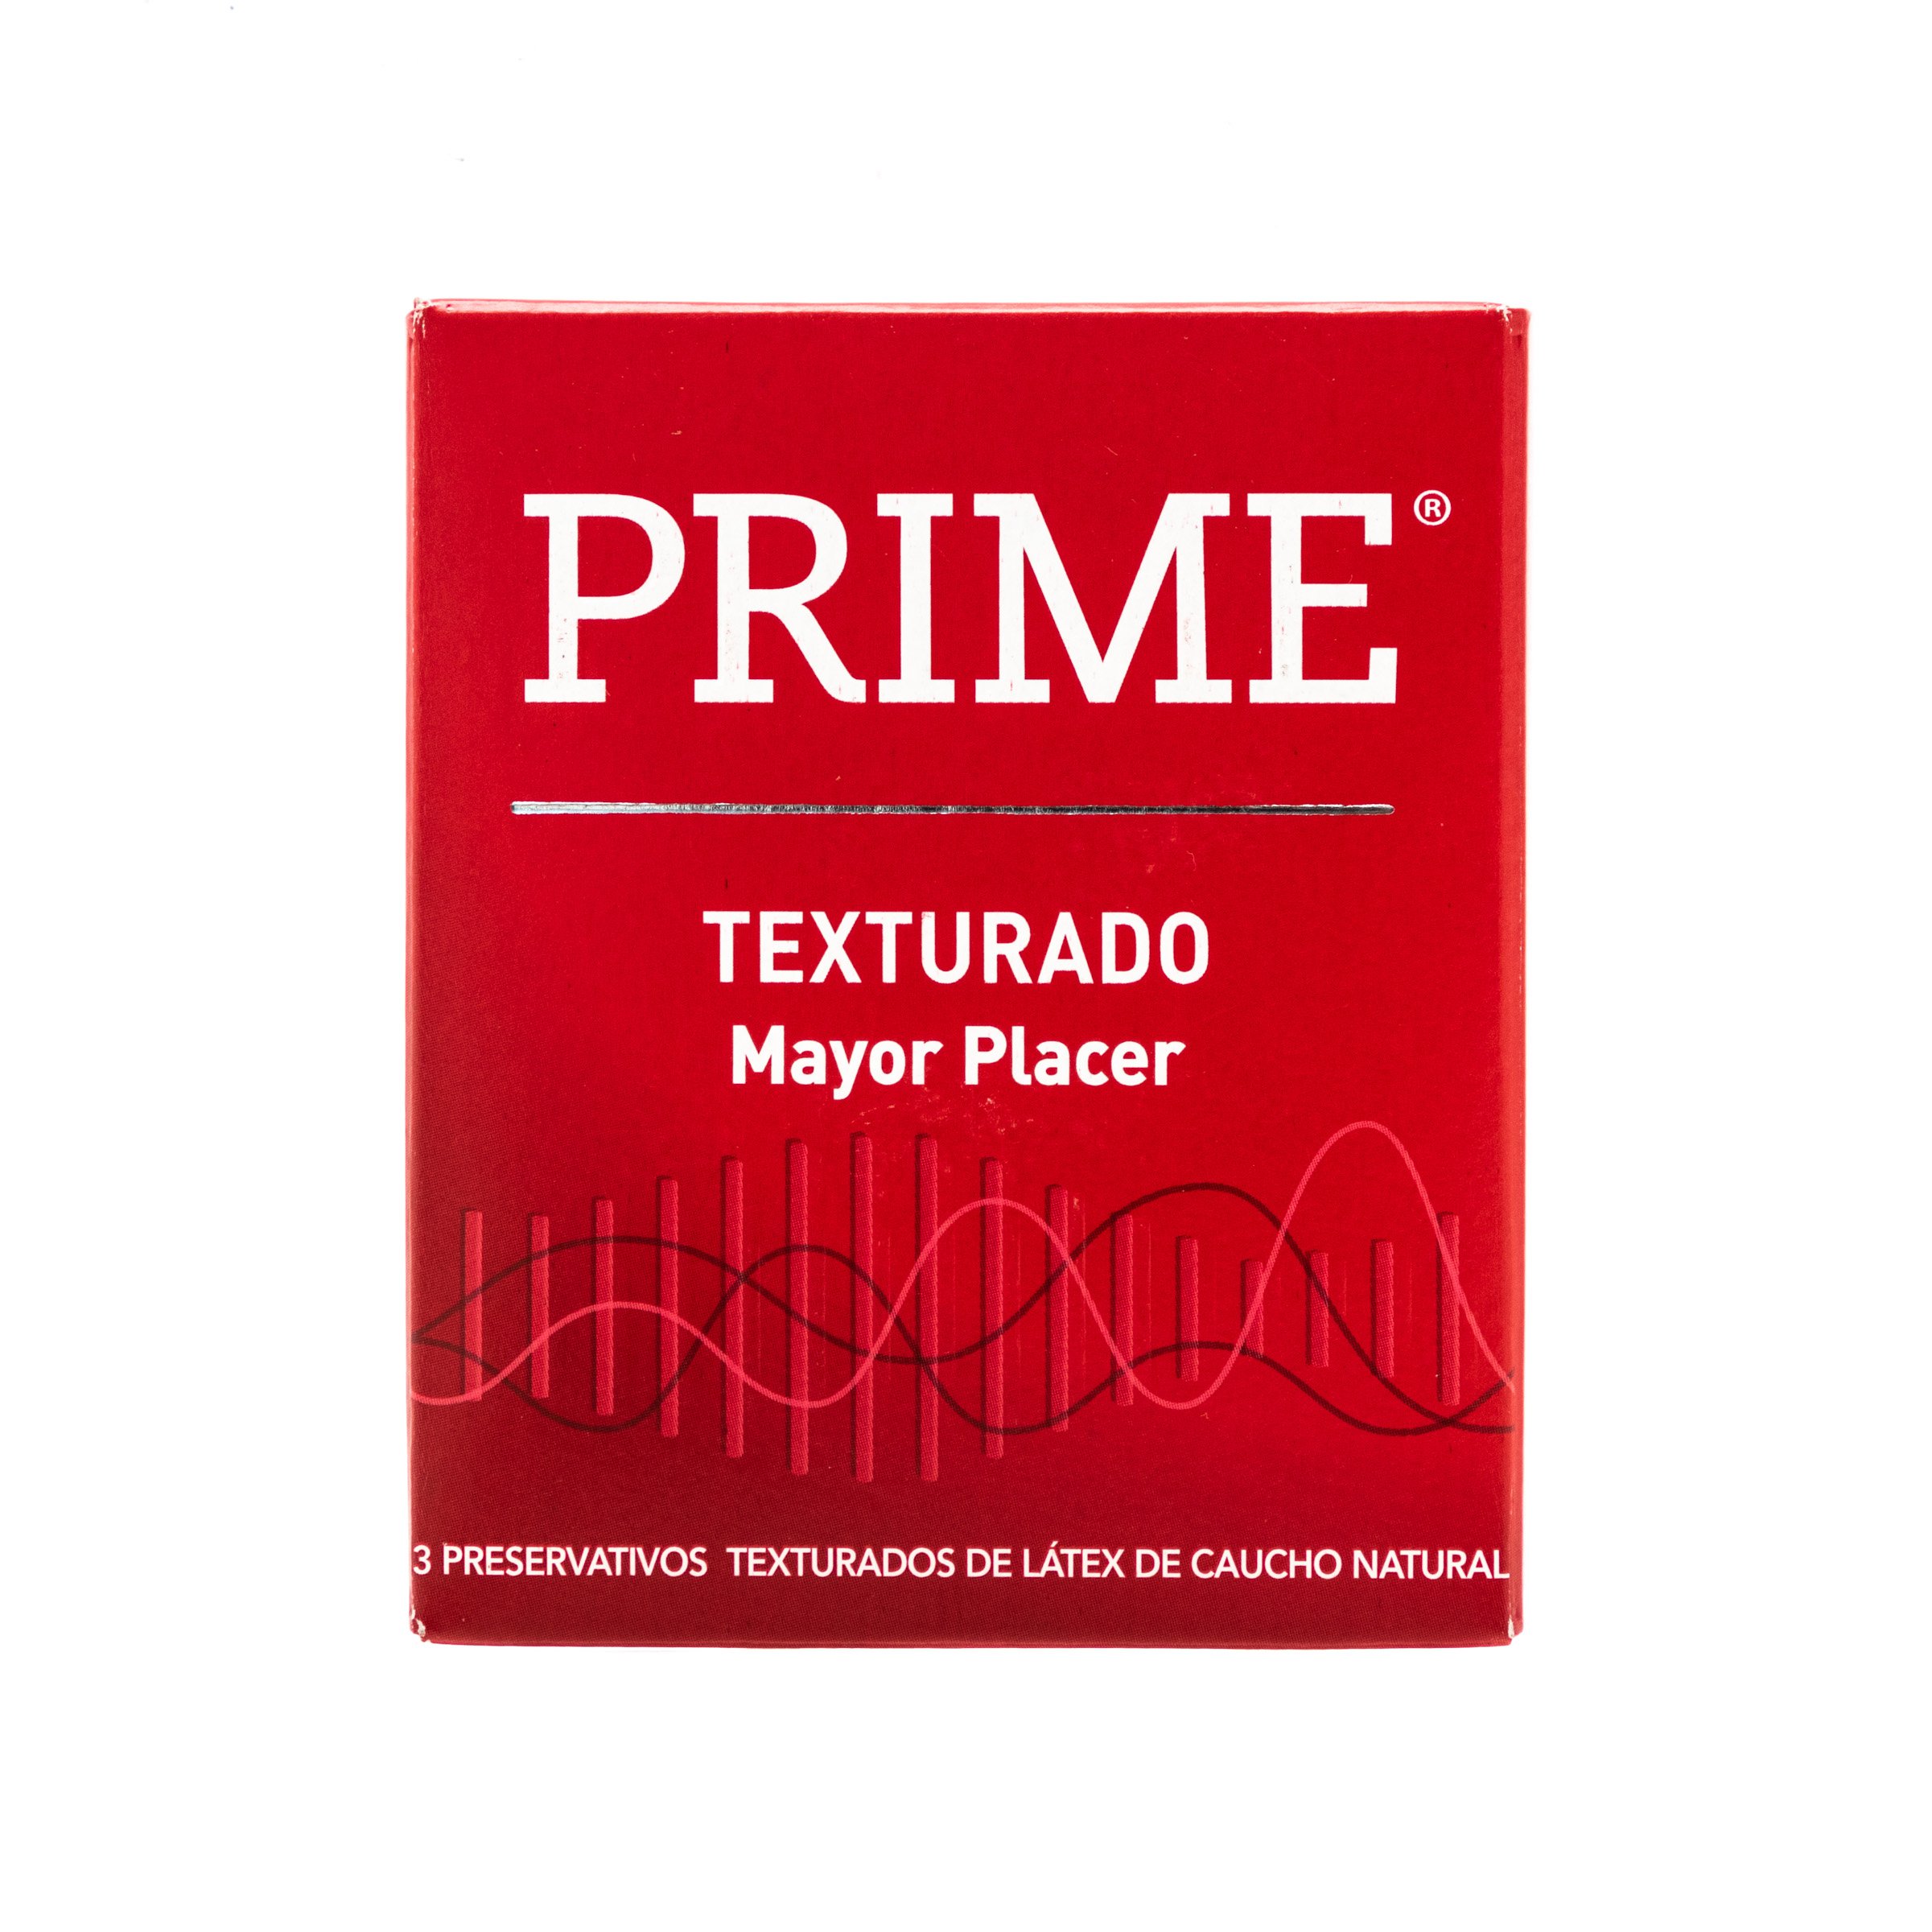 PRIME PRESERV X 3 TEXTURADO 0069